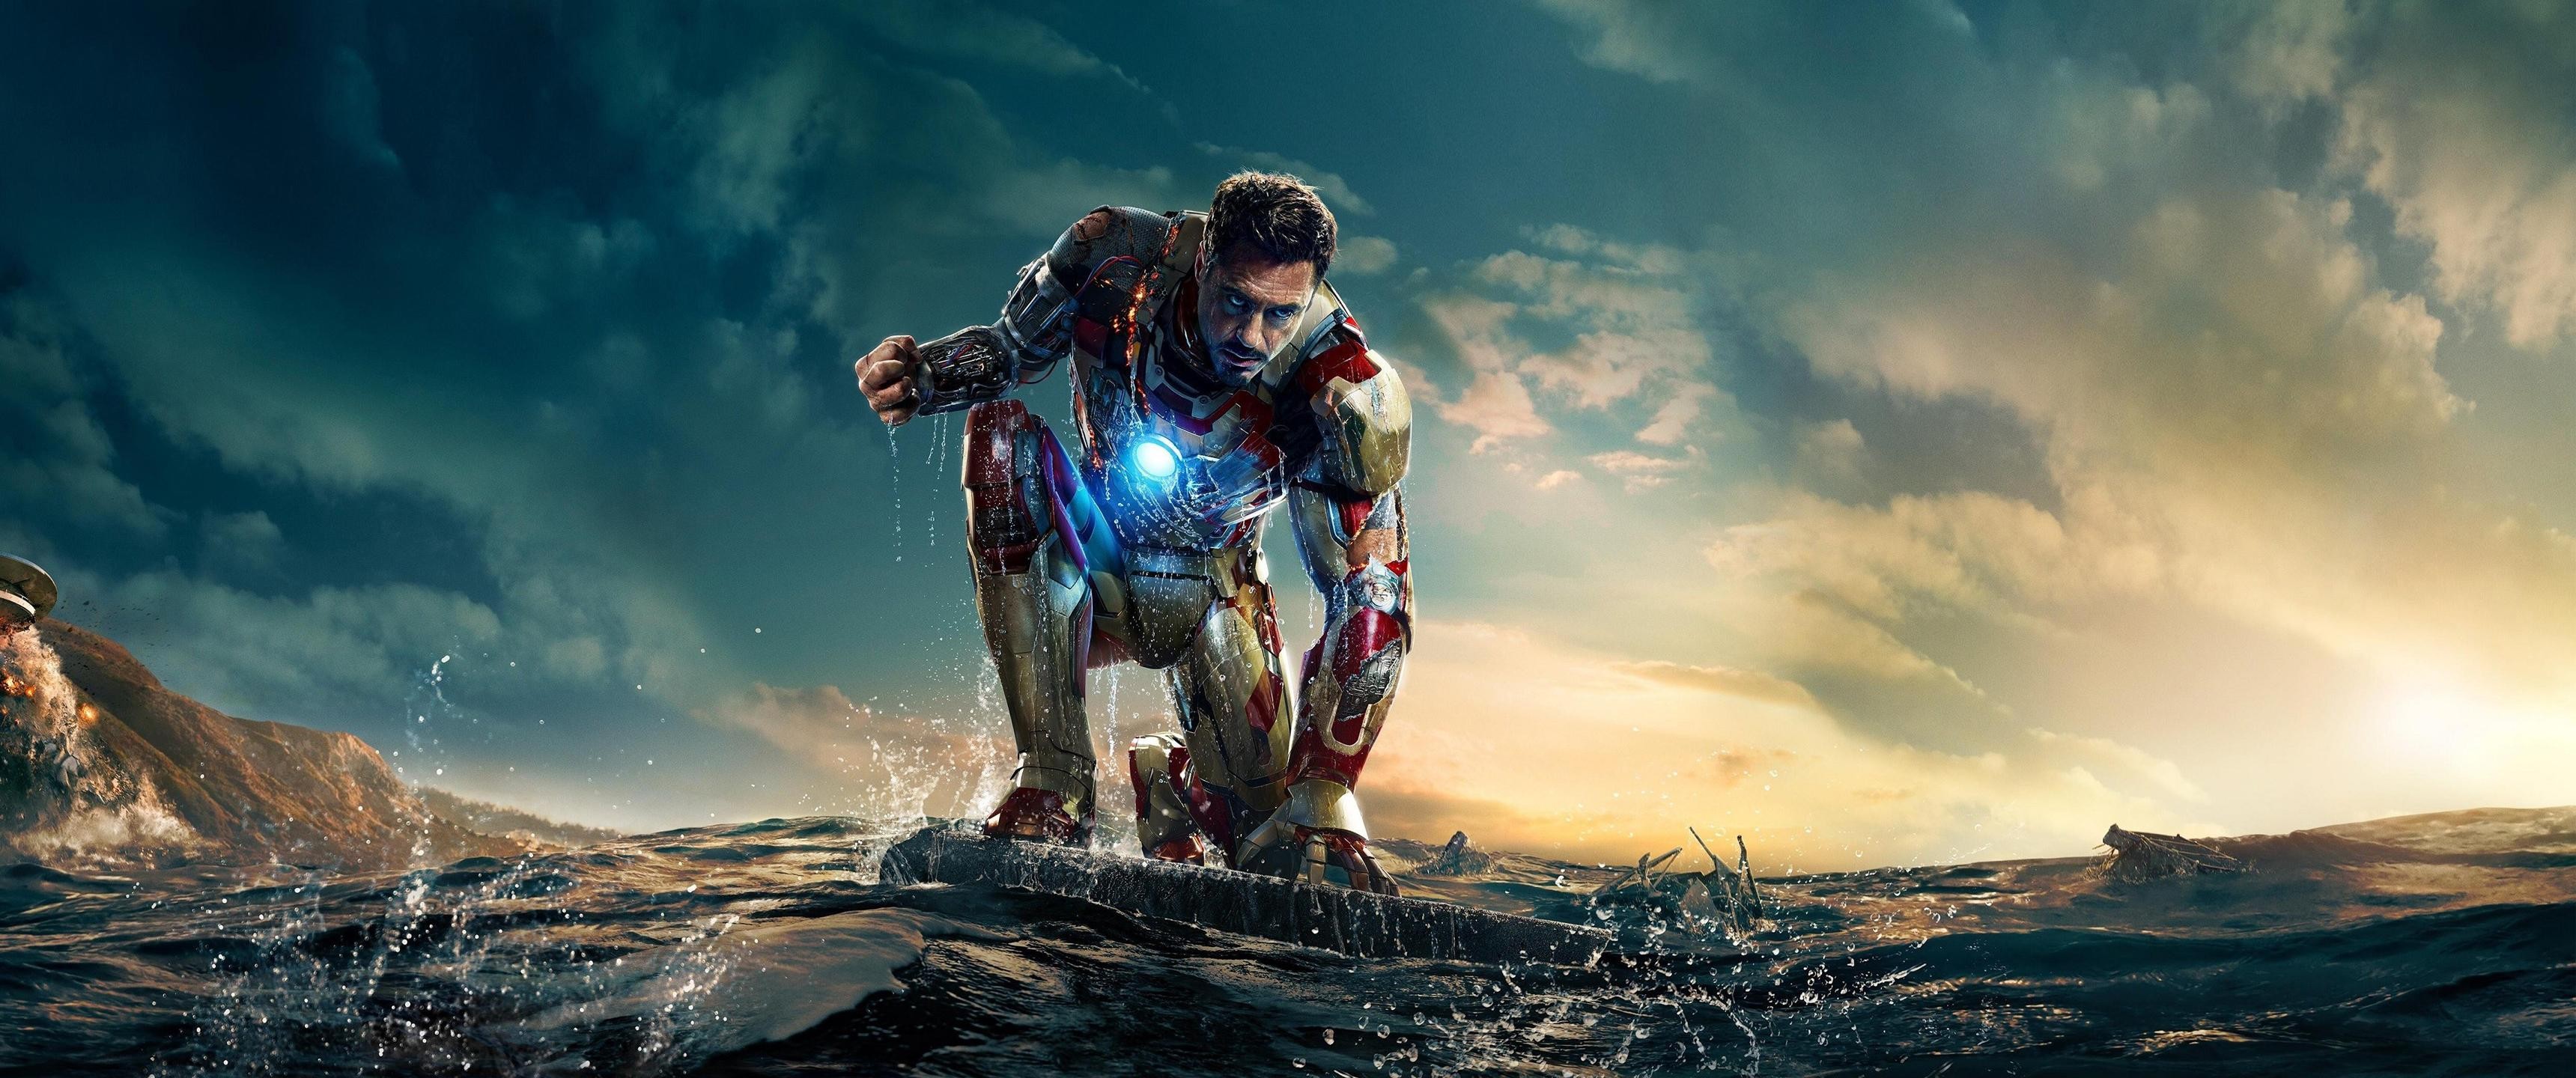 General 3440x1440 Iron Man movies Marvel Cinematic Universe Tony Stark Robert Downey Jr. men actor superhero Marvel Comics